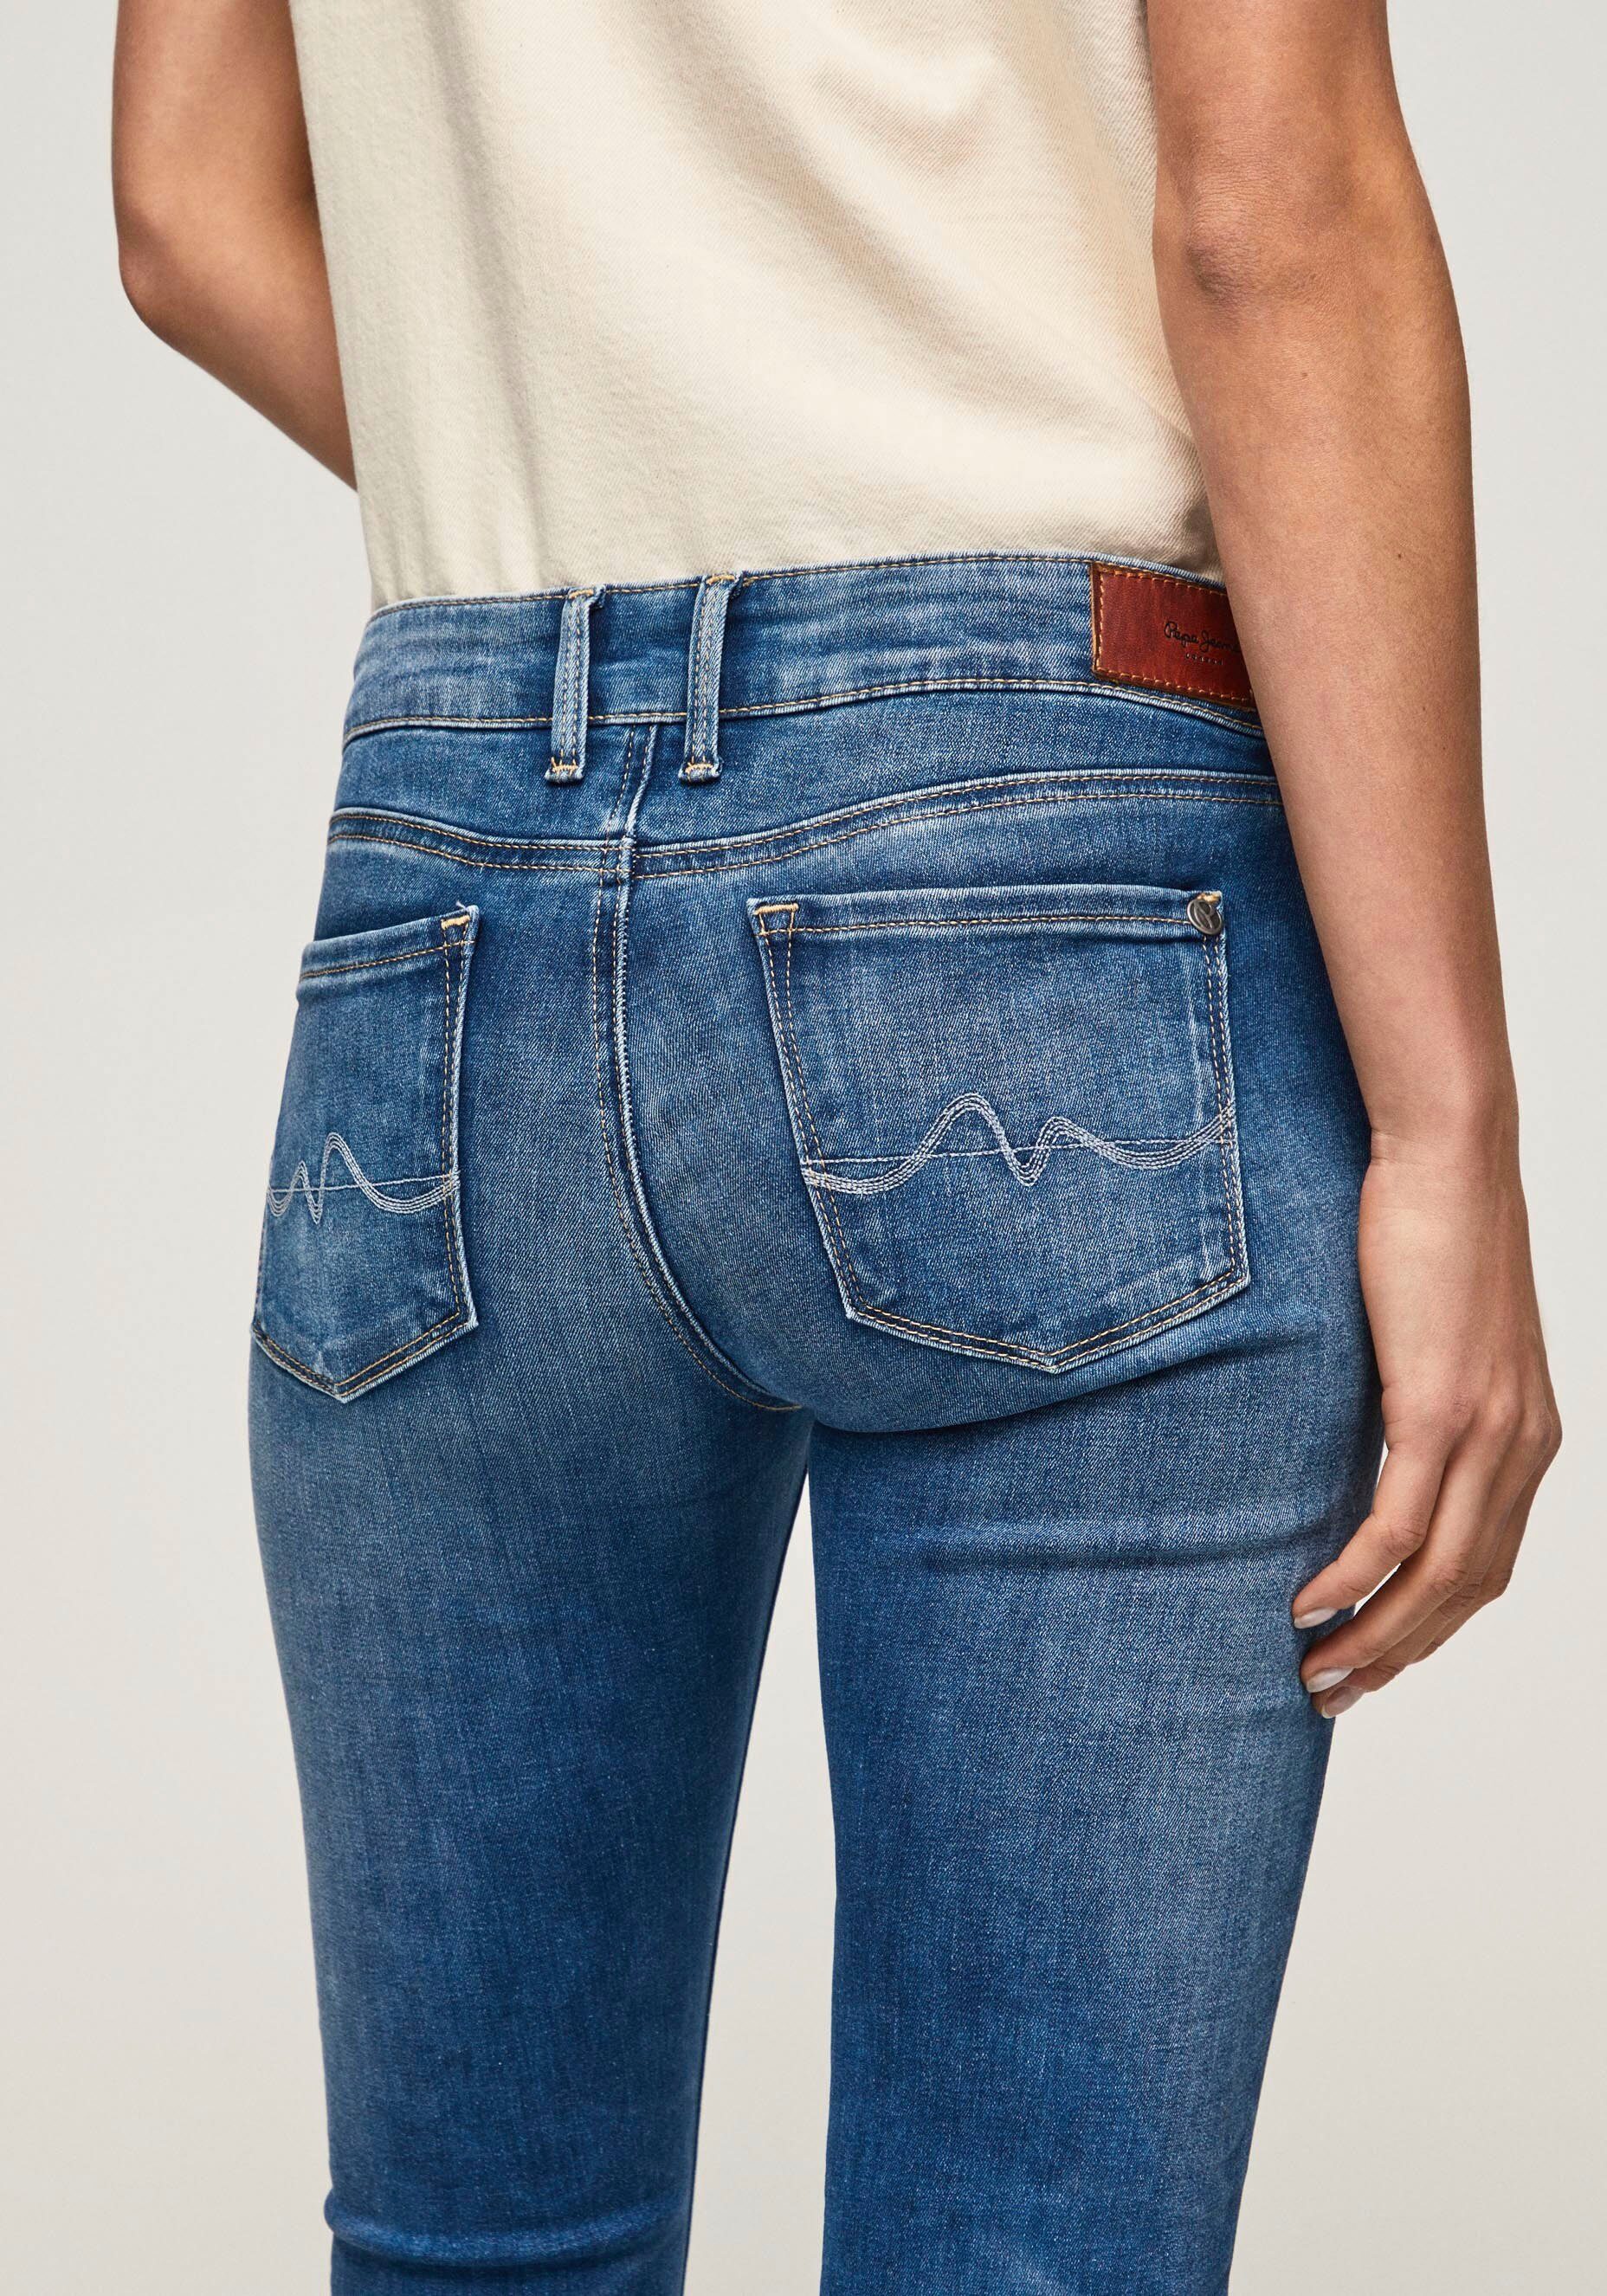 5-Pocket-Stil Skinny-fit-Jeans Pepe SOHO mit Stretch-Anteil Jeans Bund im blue und 1-Knopf